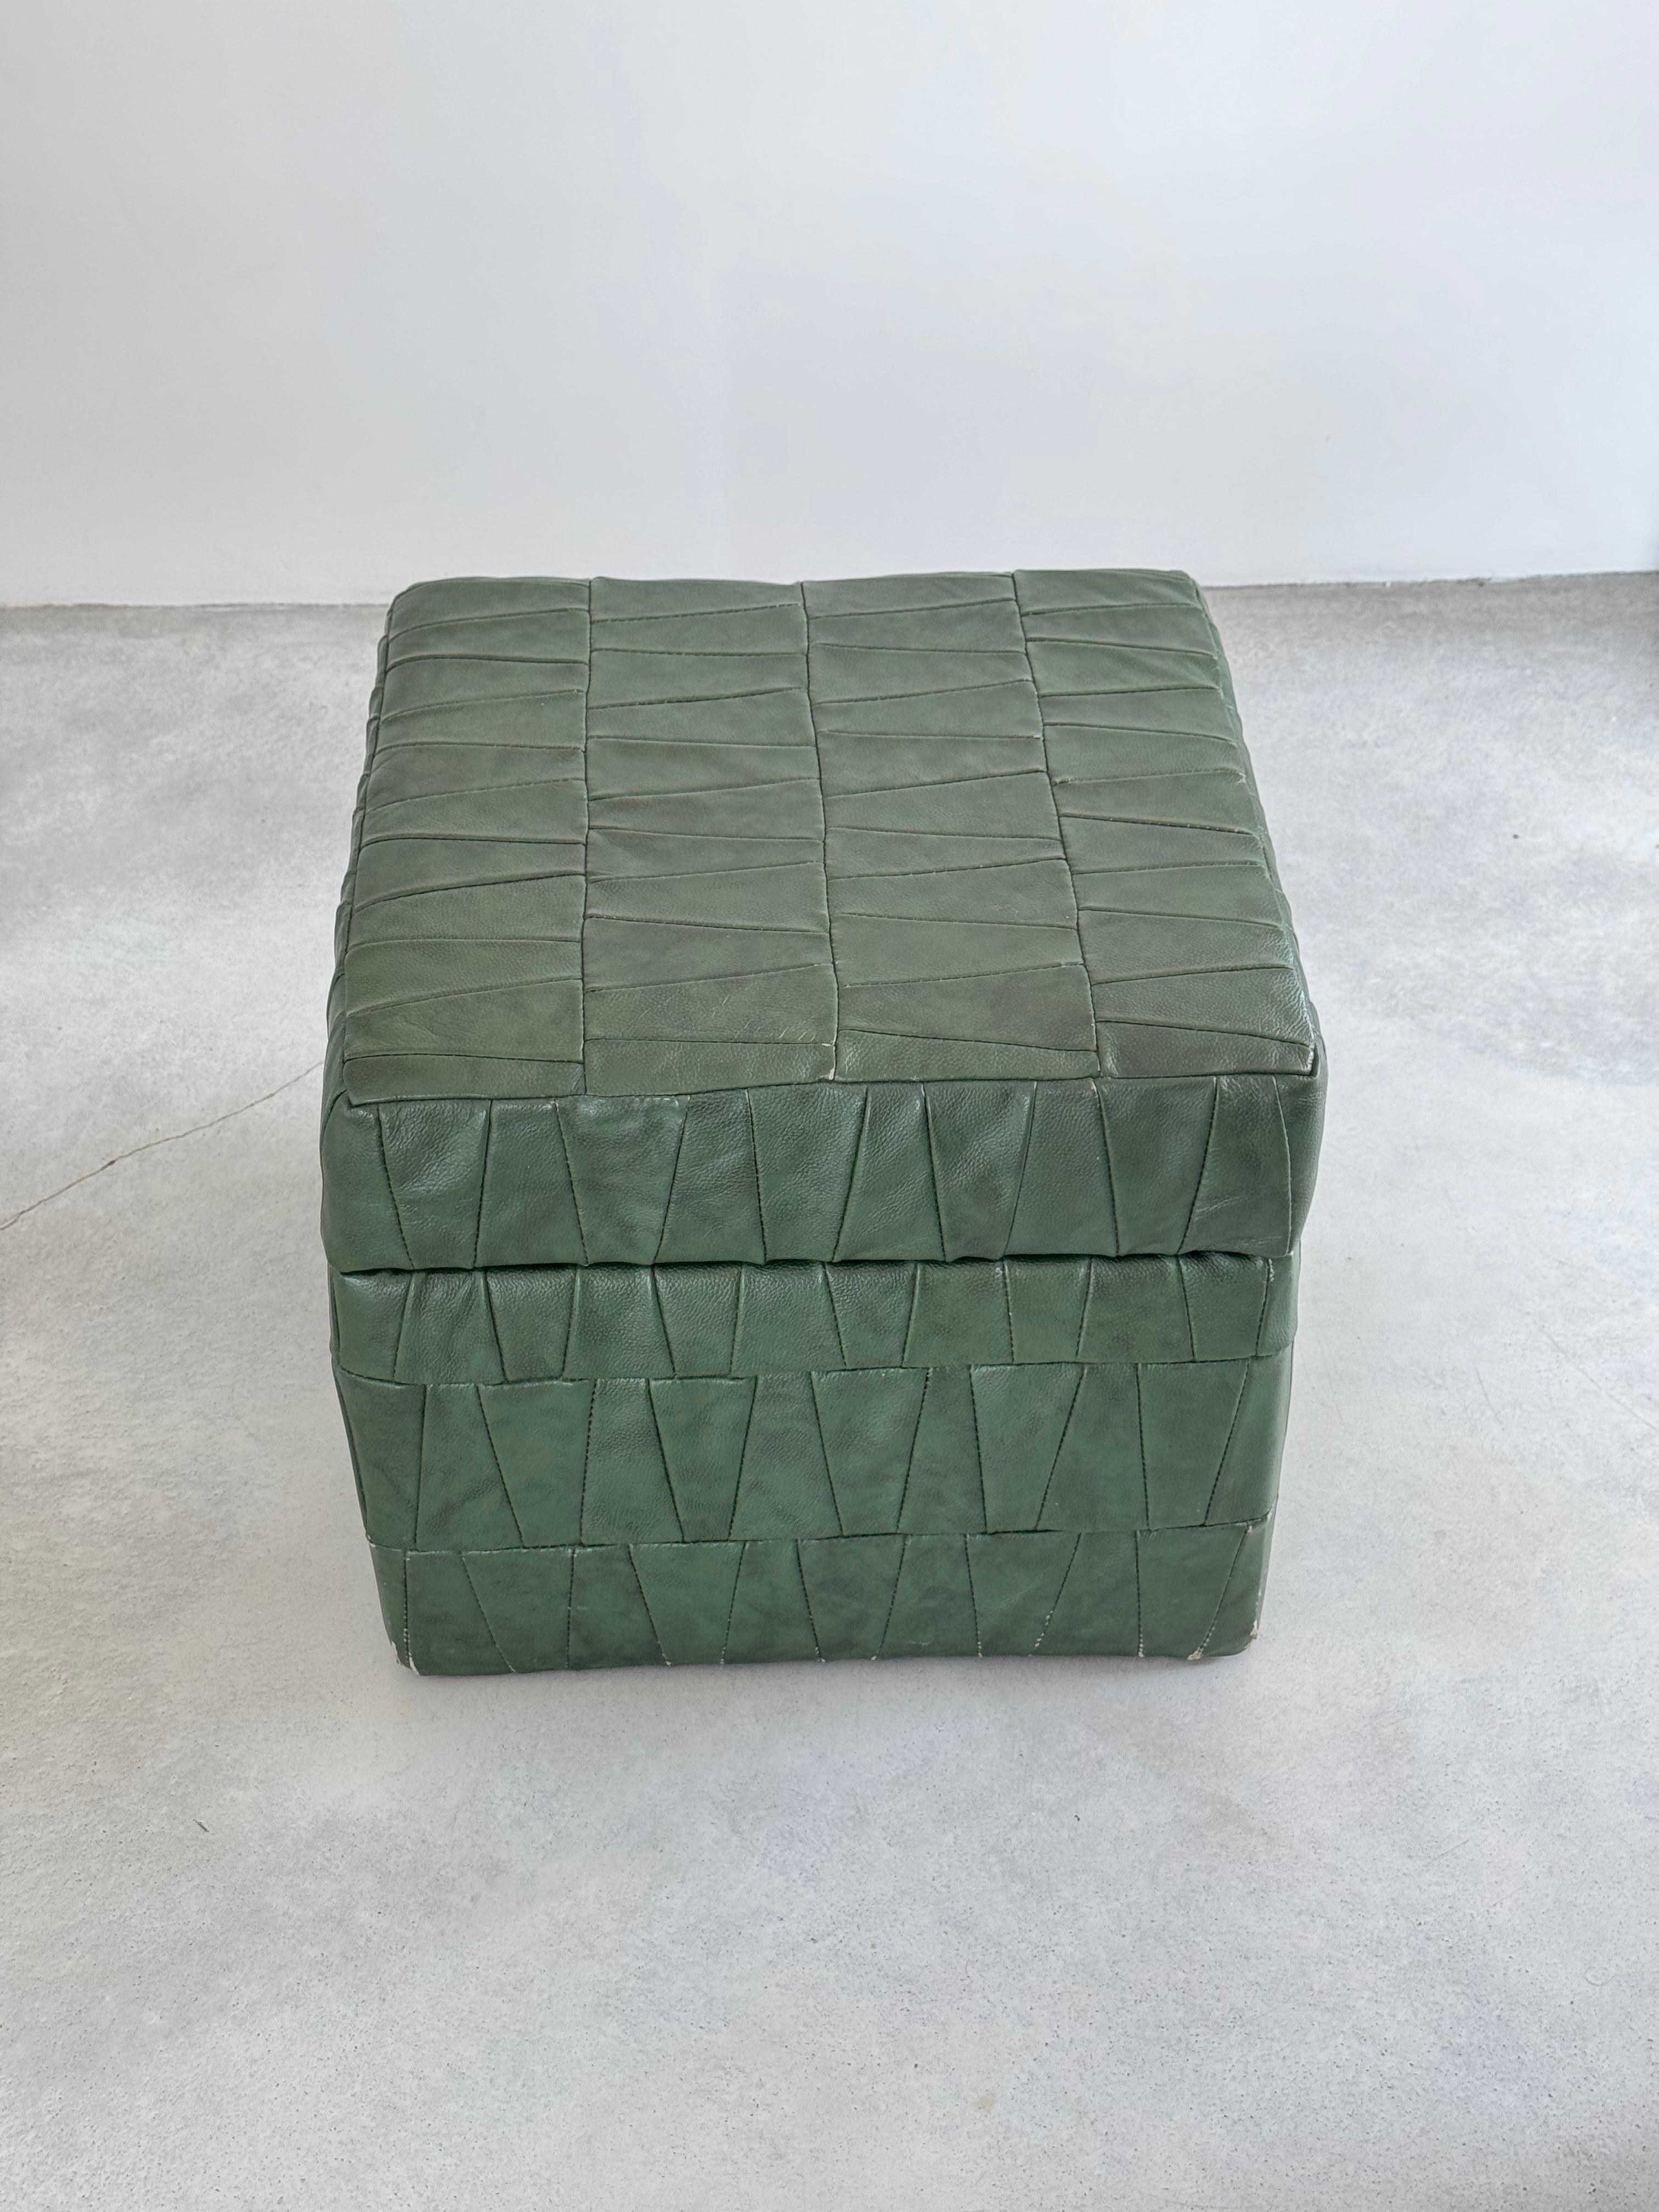 Space Age De Sede Design Dark Green Leather Patchwork Storage Ottoman, Switzerland 1970s For Sale